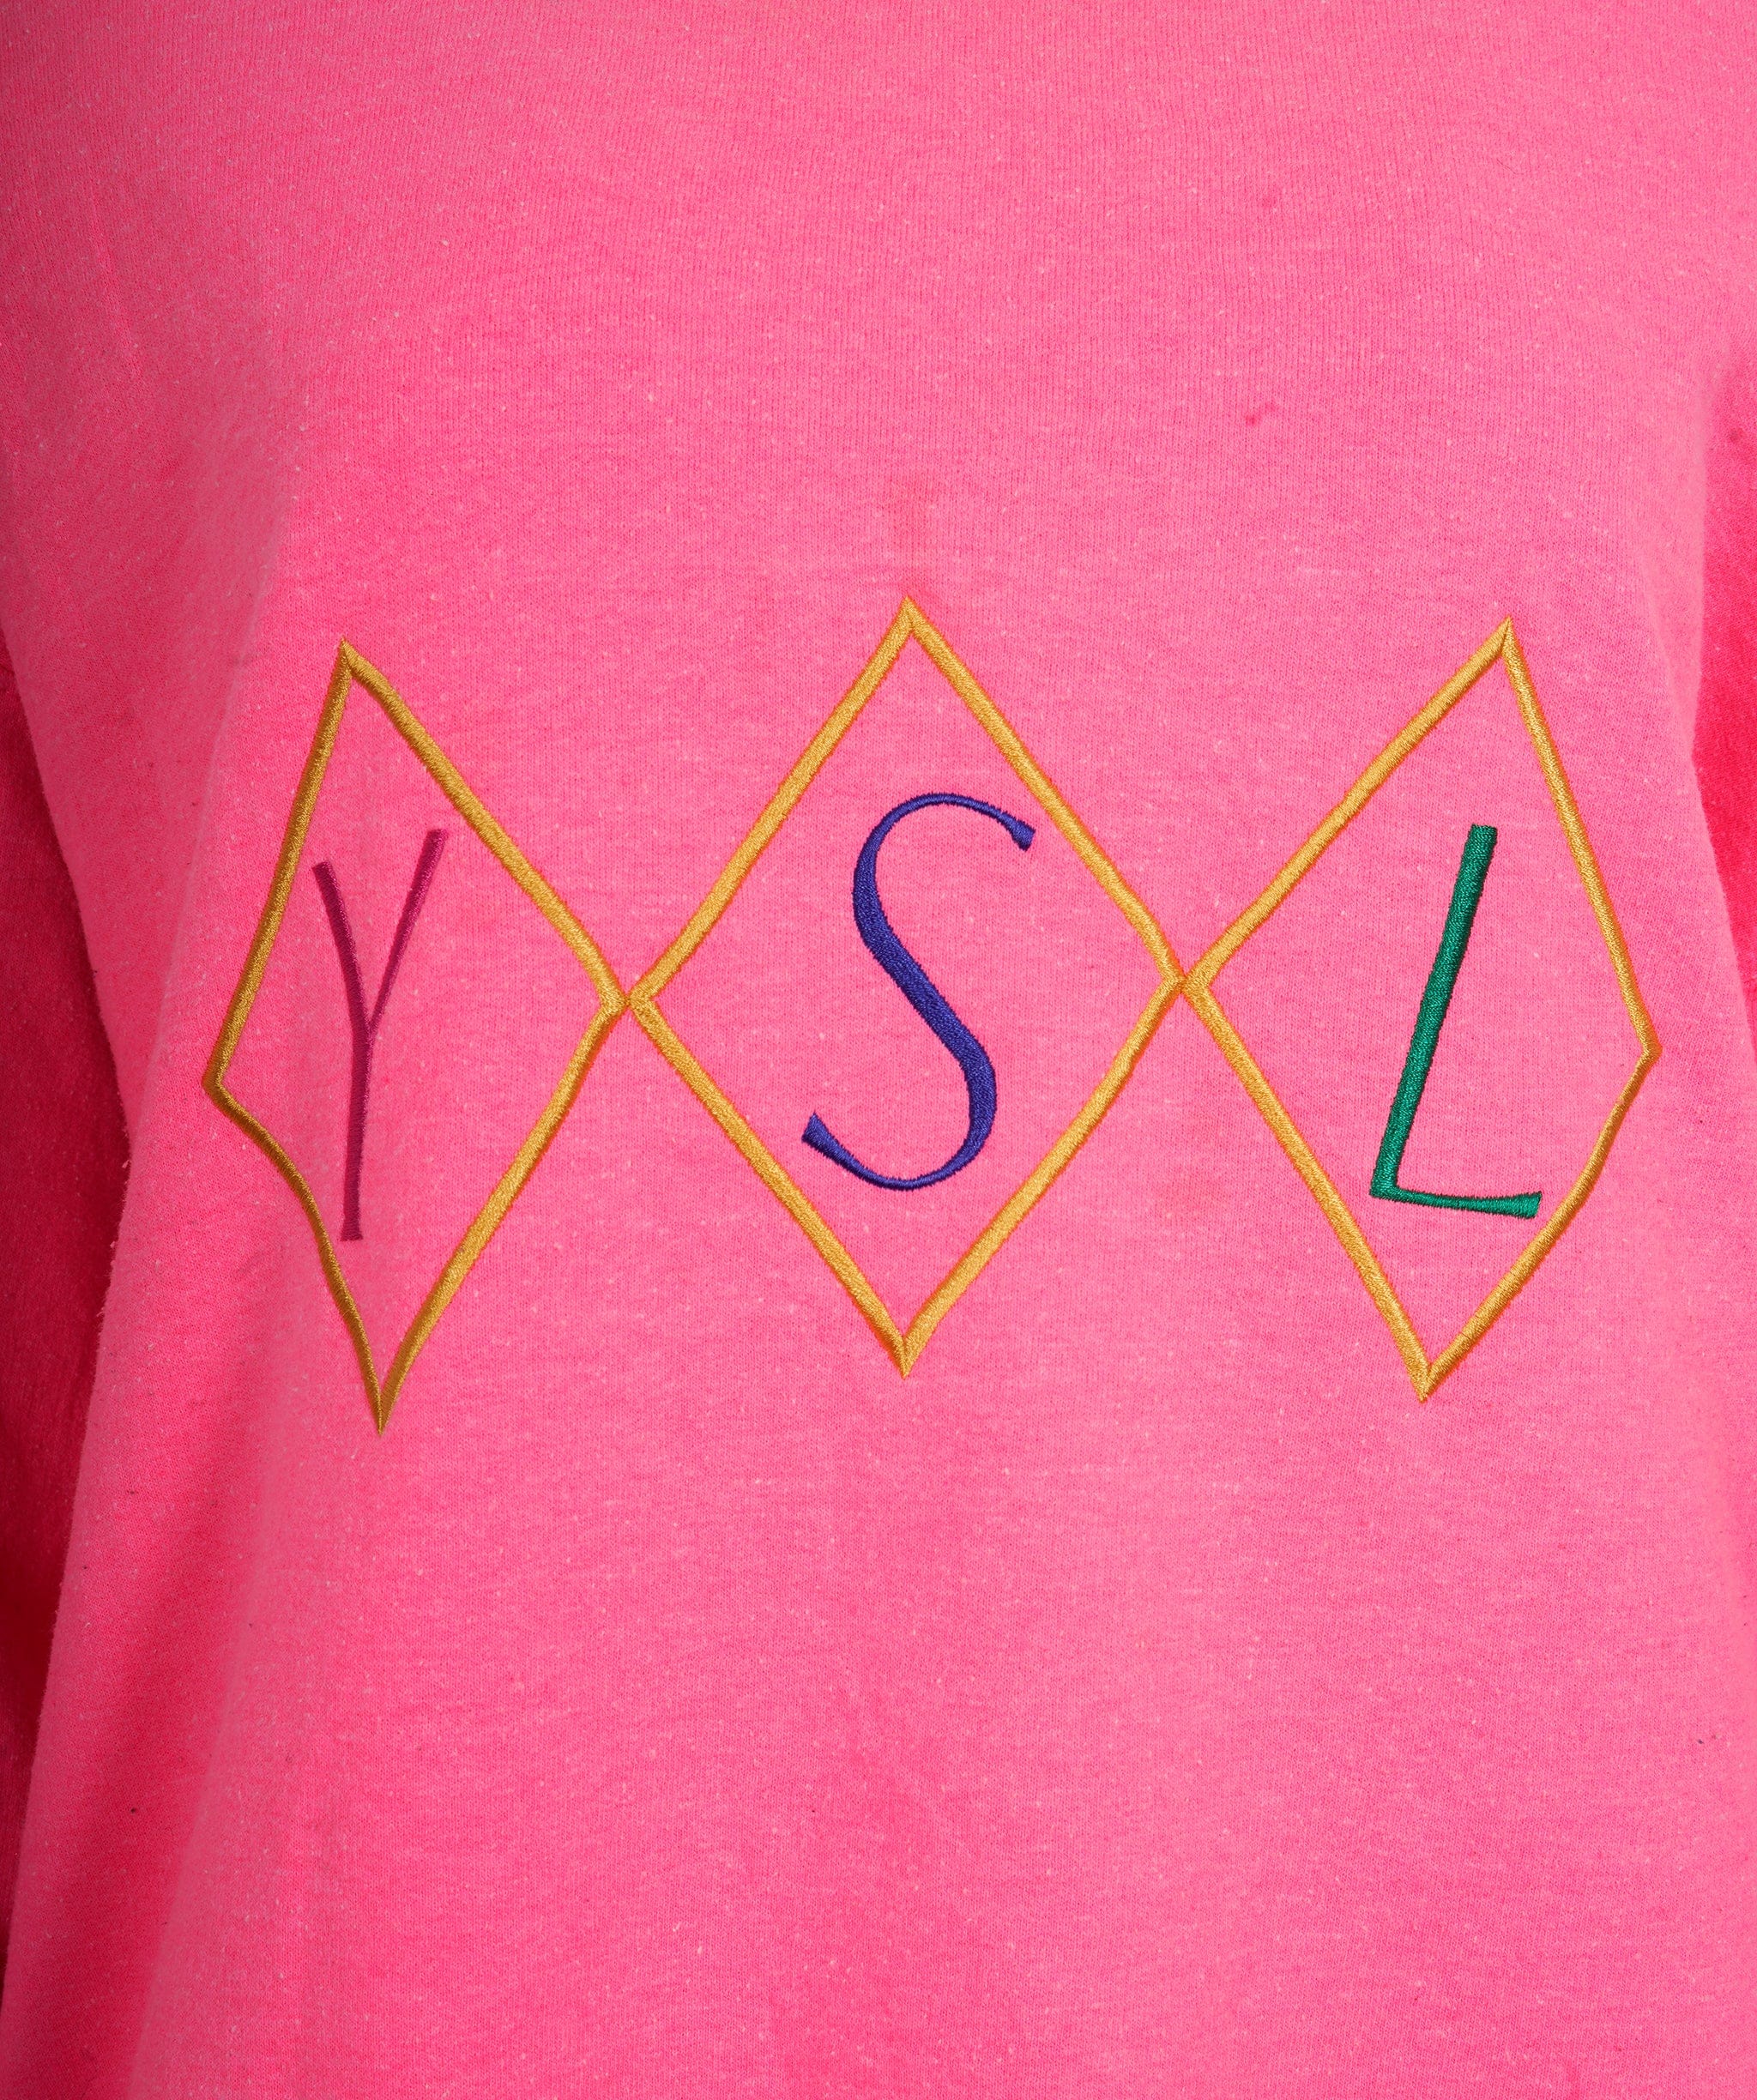 YSL YSL Sweatshirt Pink L "YSL diamonds" UKL1227